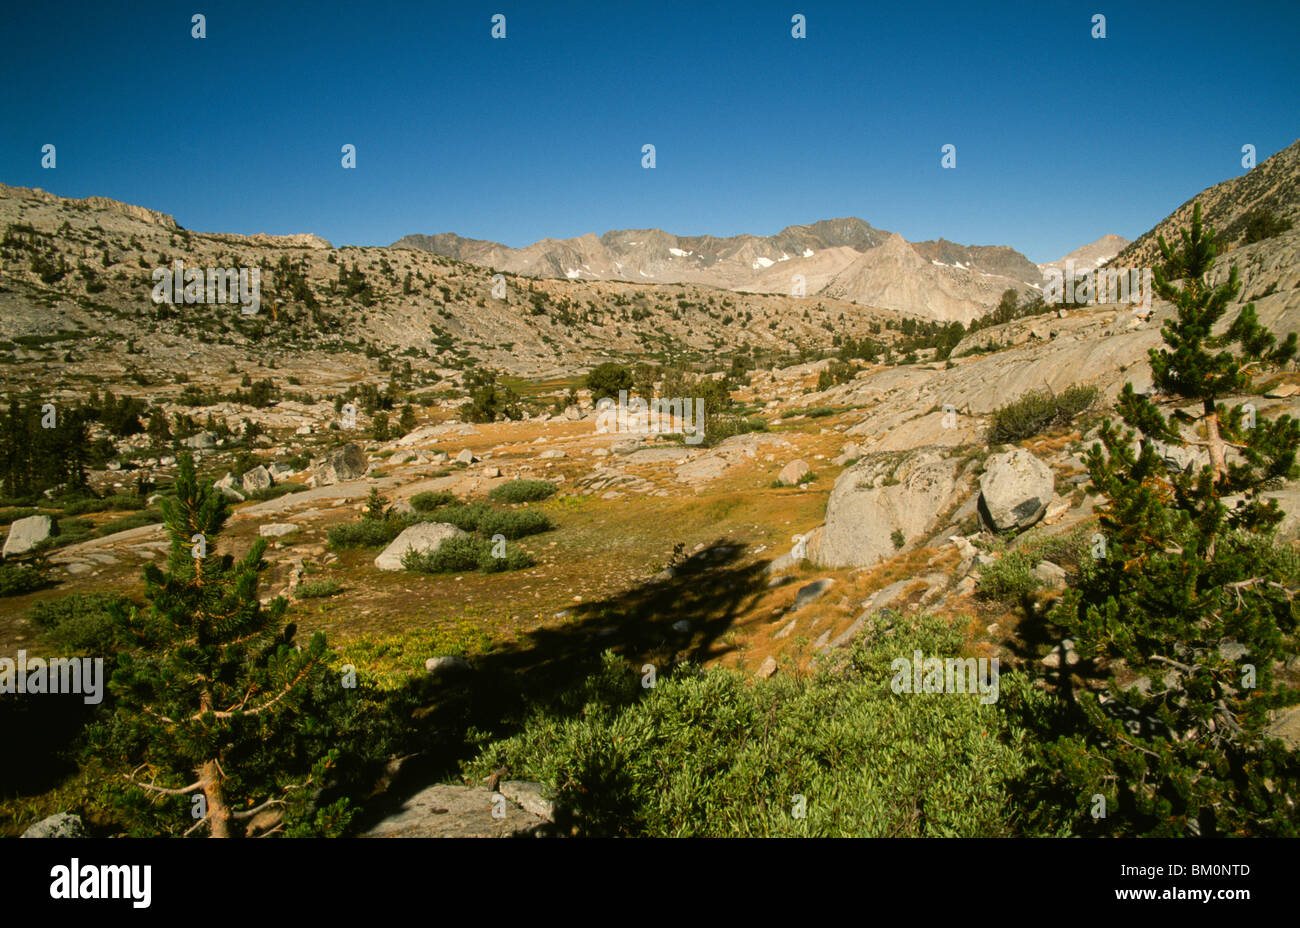 Rocks on a landscape, Dusy Basin, Kings Canyon National Park, California, USA Stock Photo